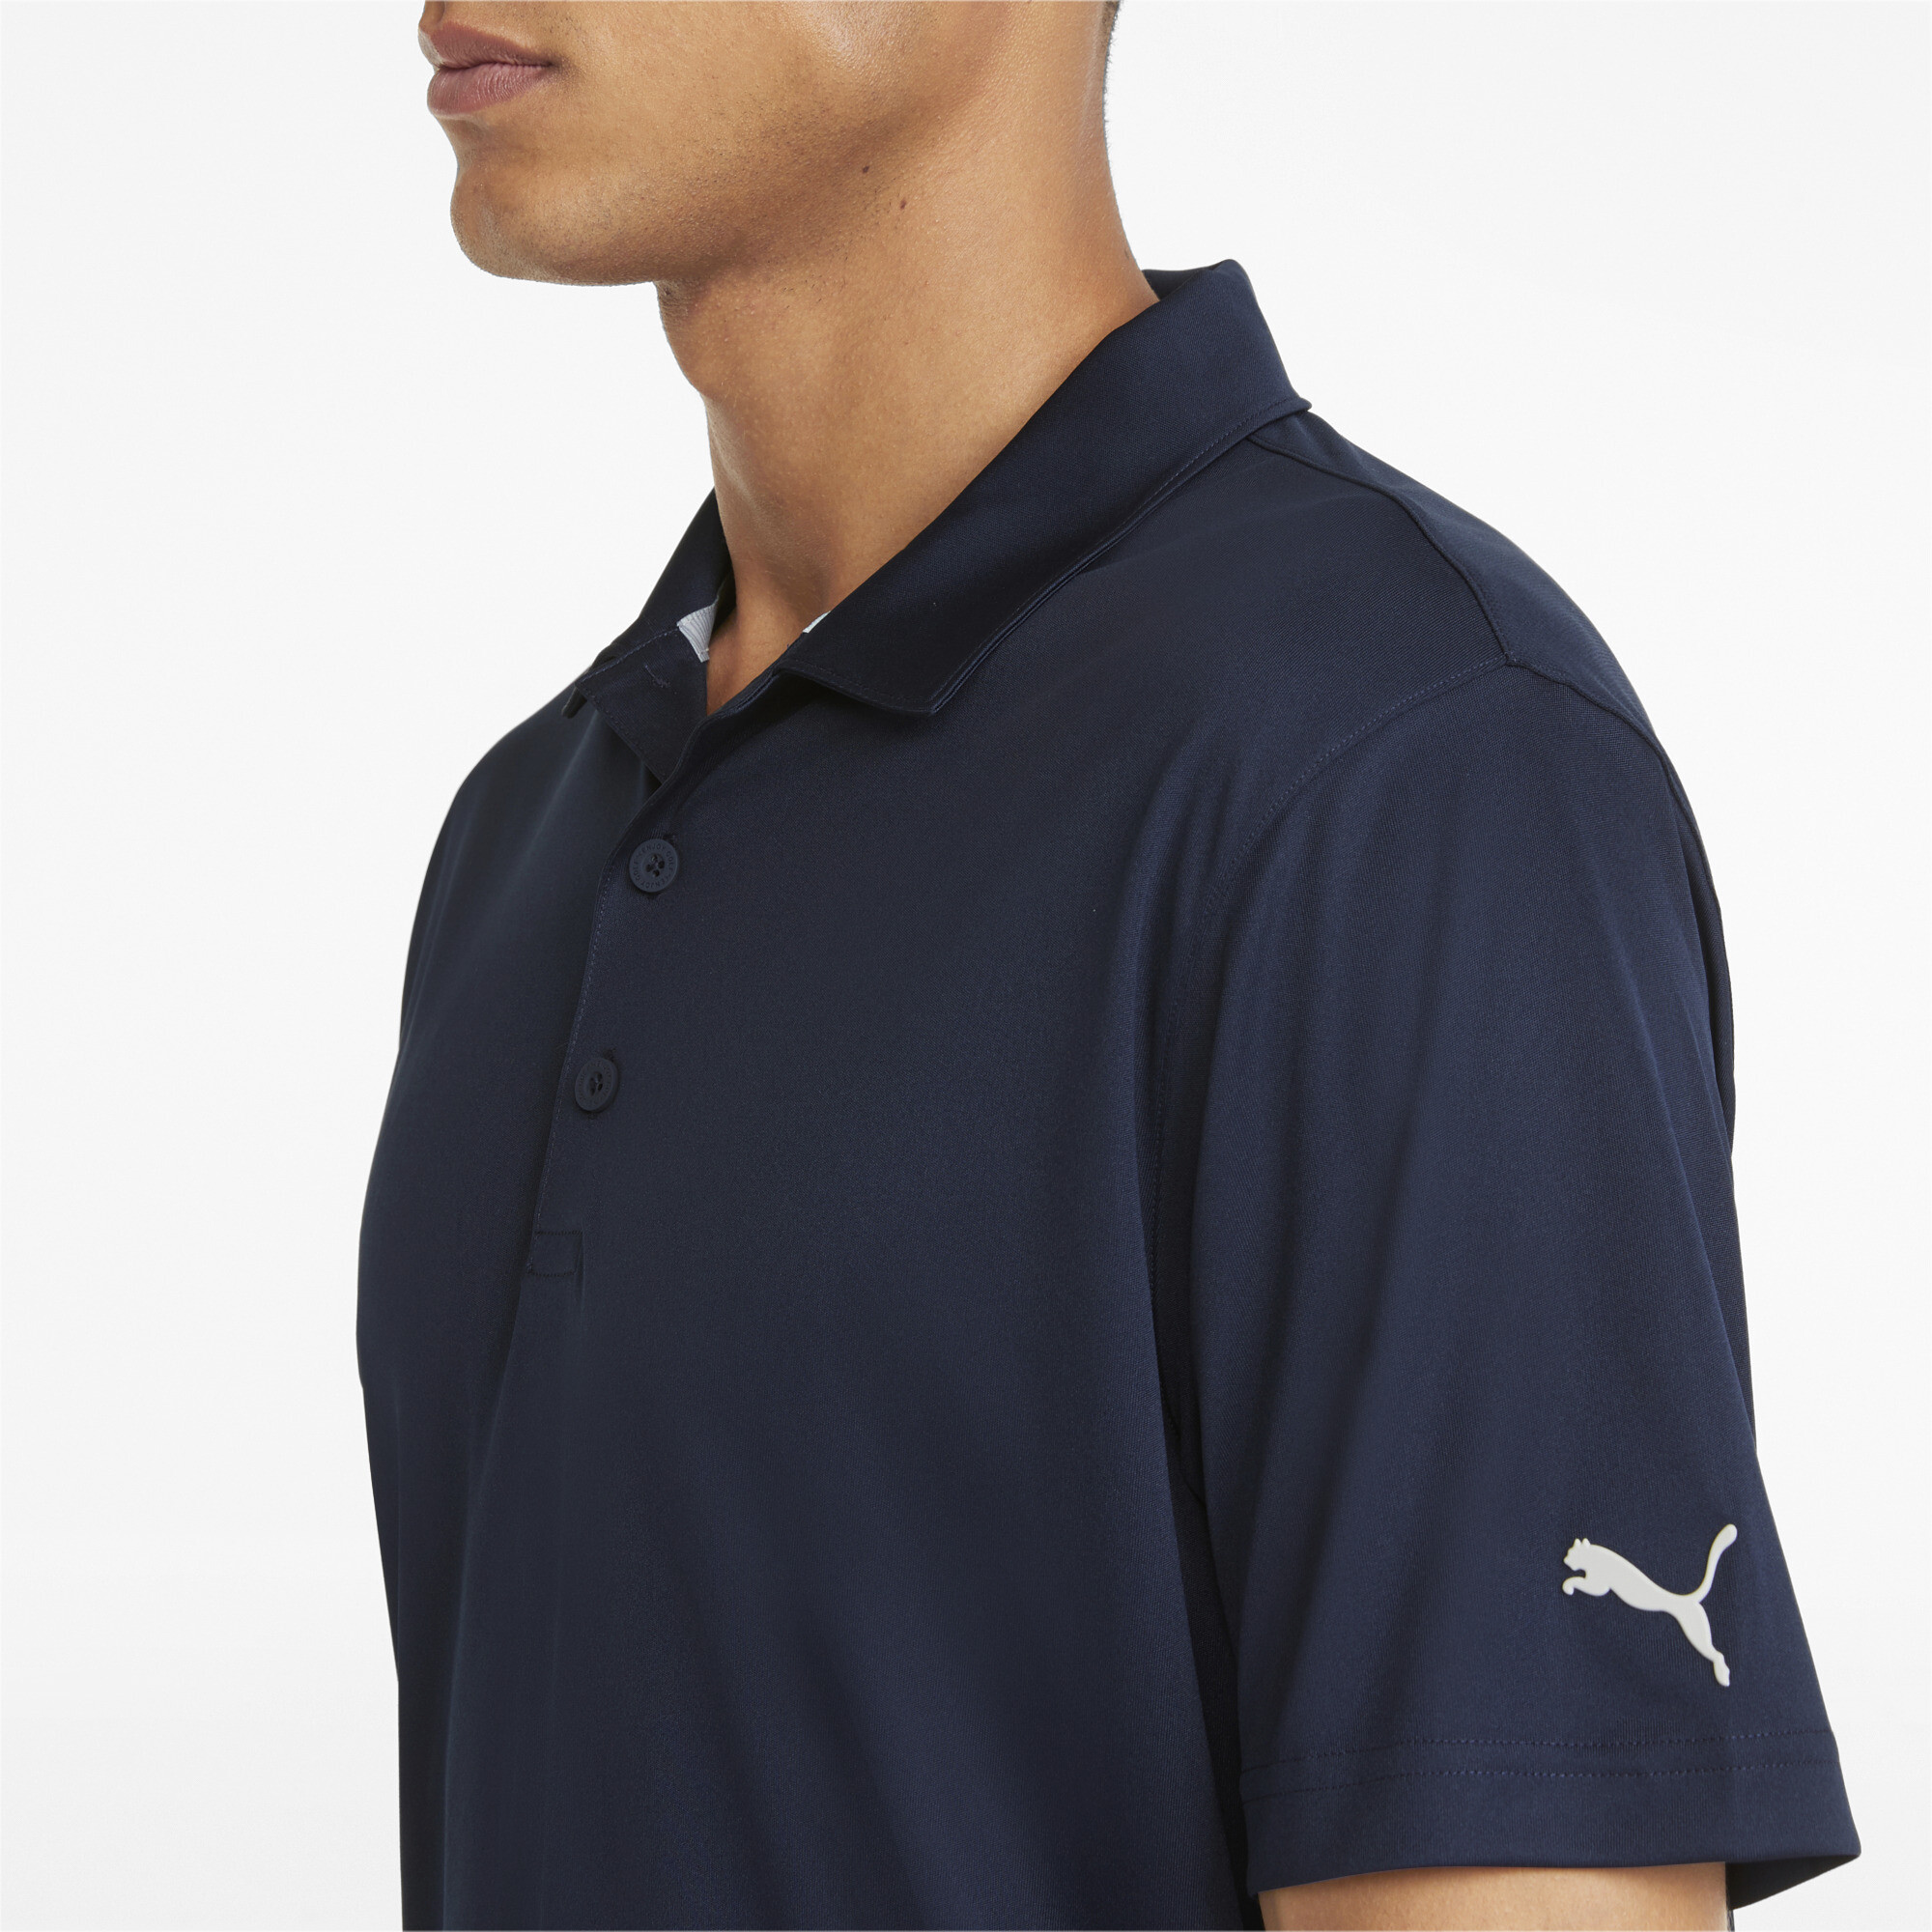 Men's Puma Gamer's Golf Polo Shirt T-Shirt, Blue T-Shirt, Size L T-Shirt, Clothing